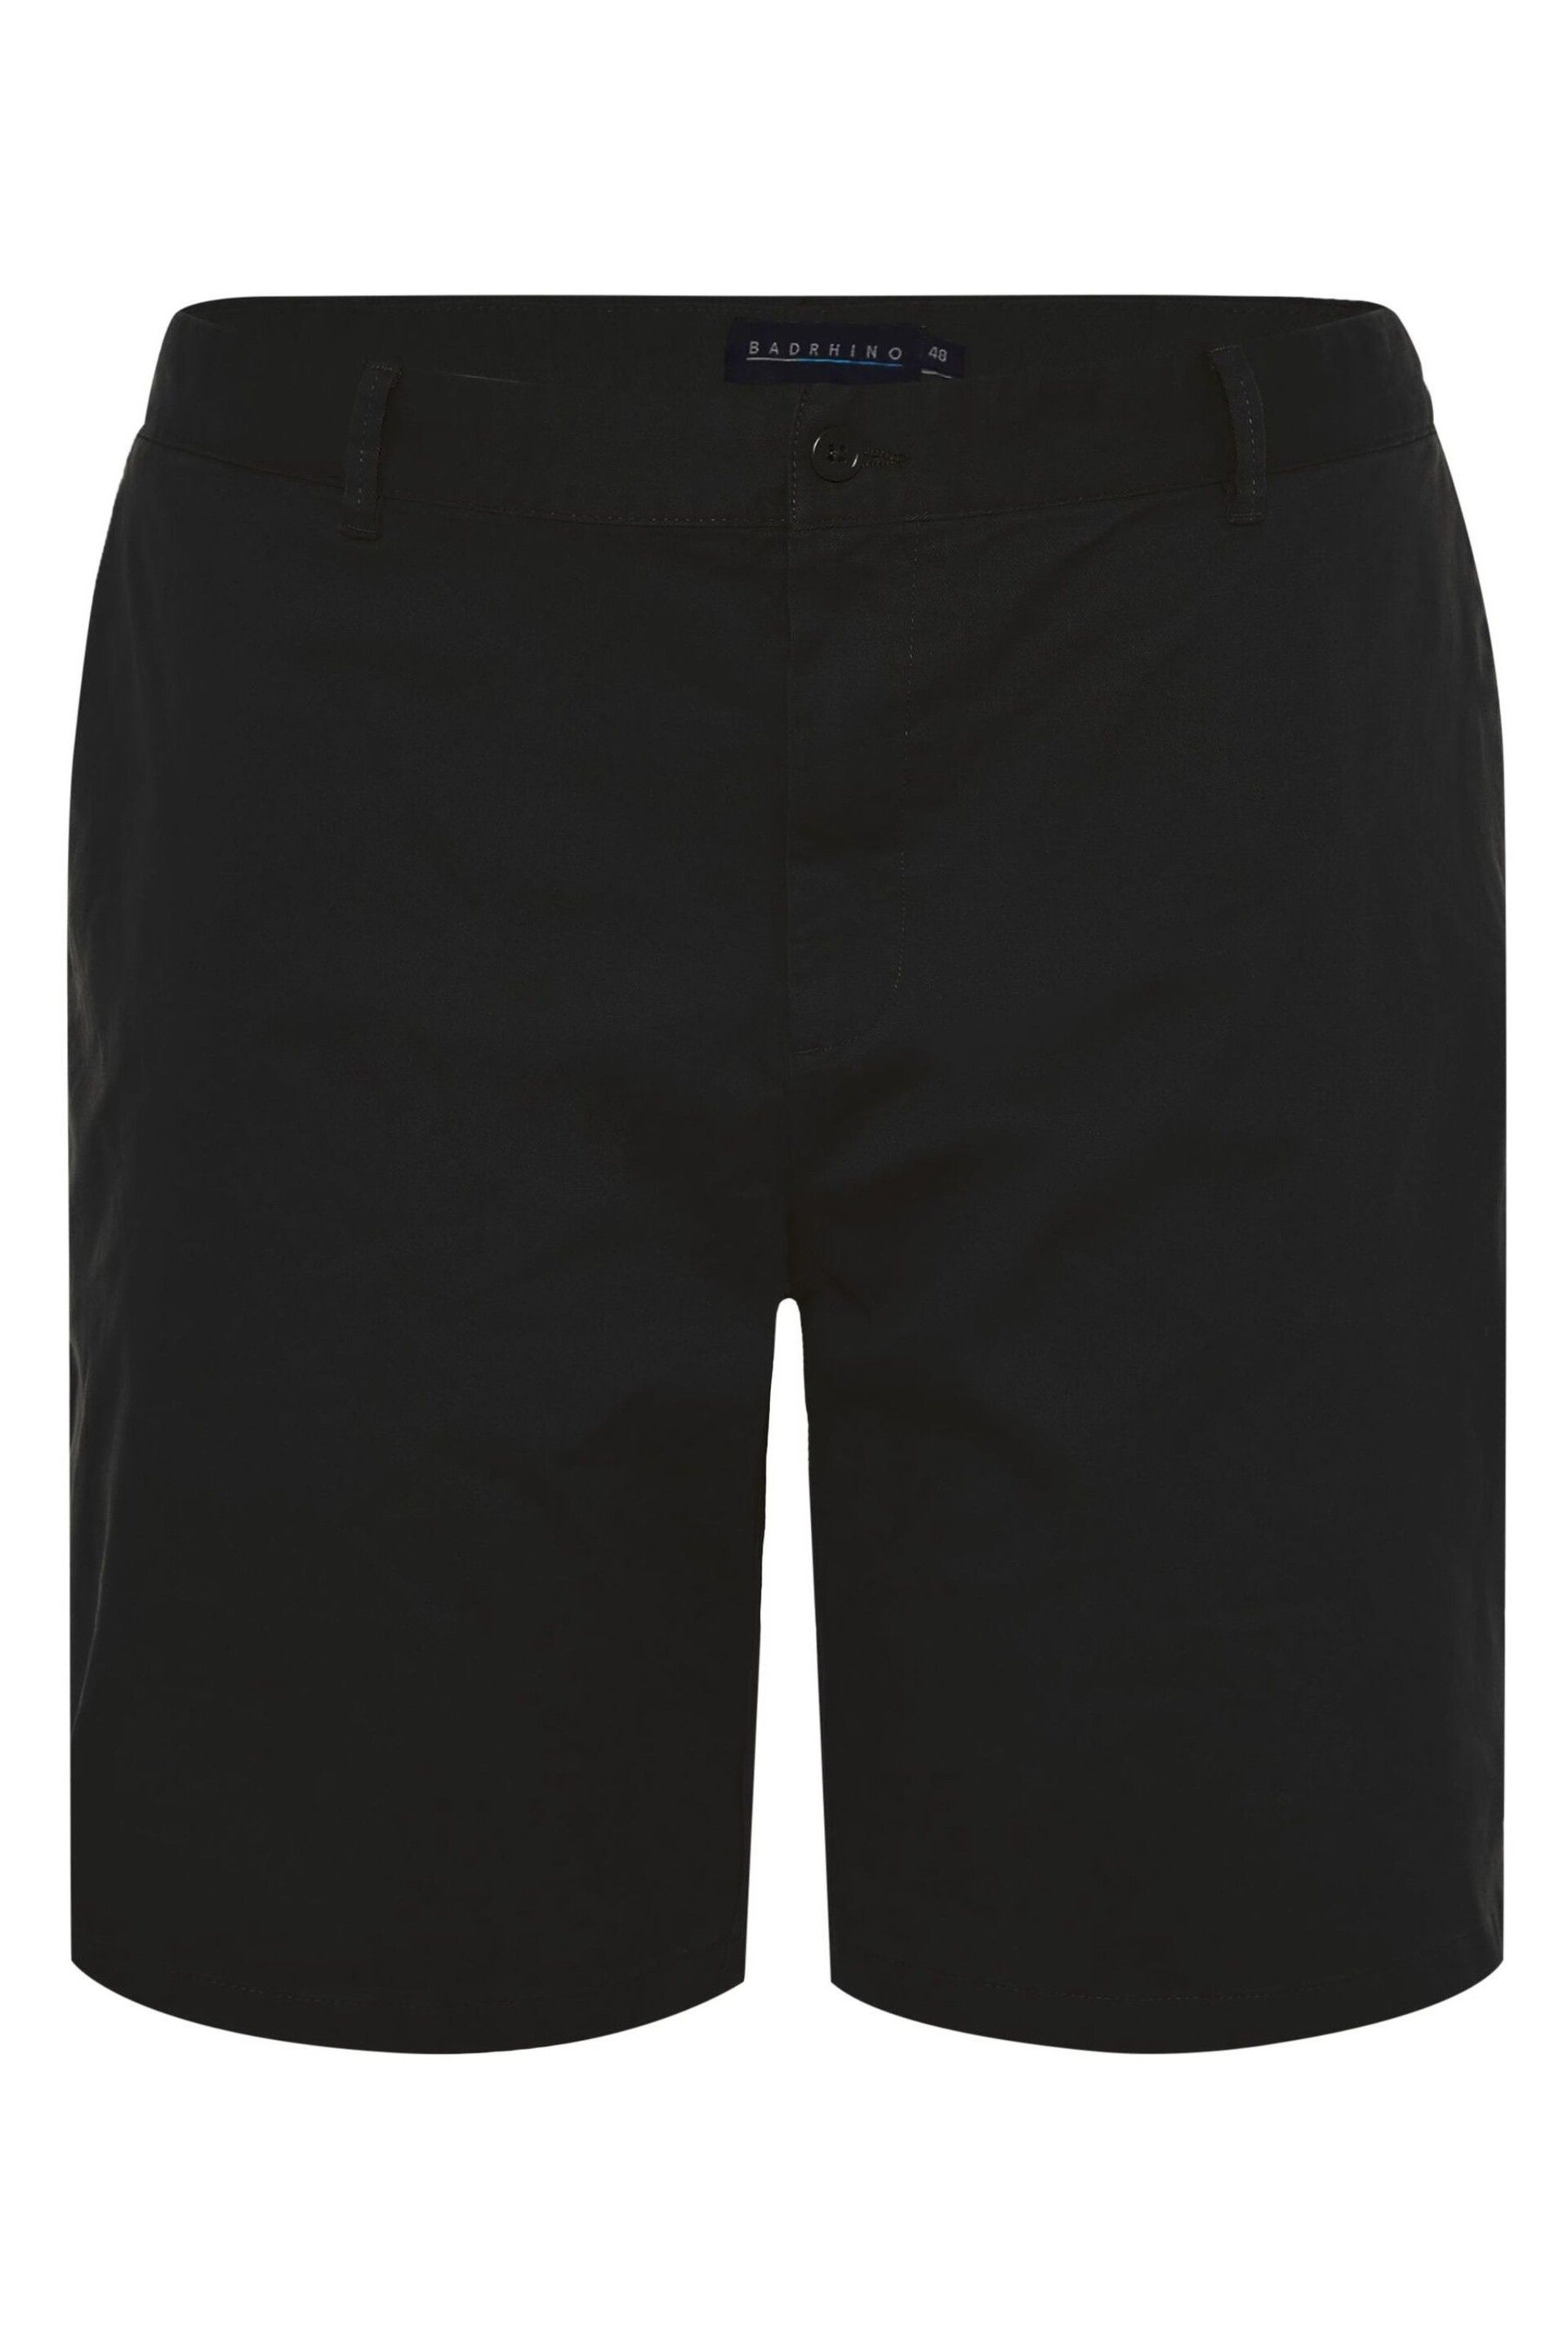 BadRhino Big & Tall Black Stretch Chino Shorts - Image 5 of 6